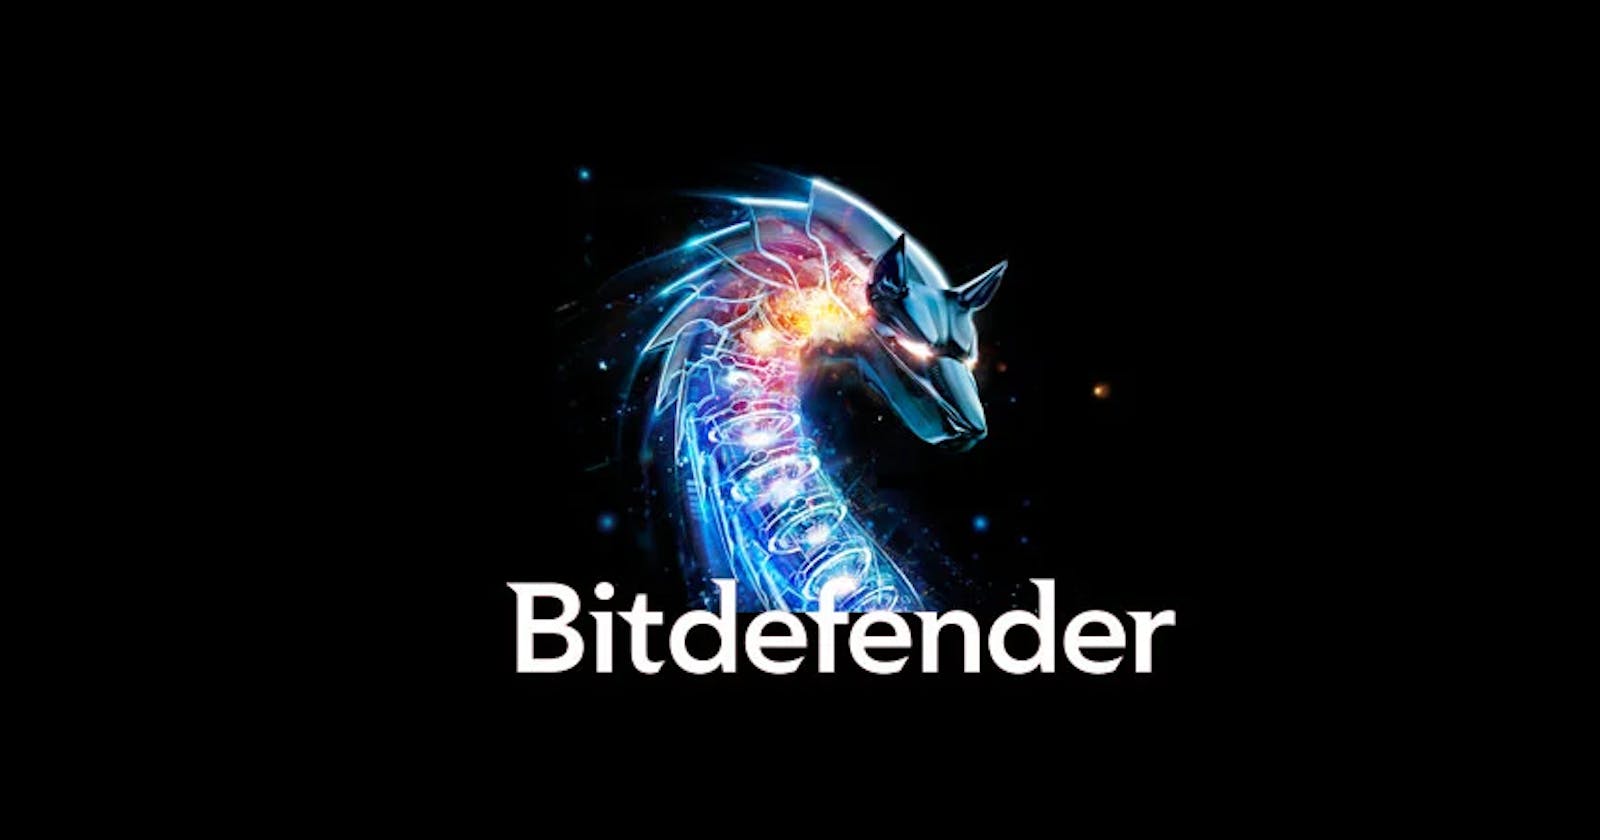 Bitdefender releases a free universal decryptor for MortalKombat ransomware